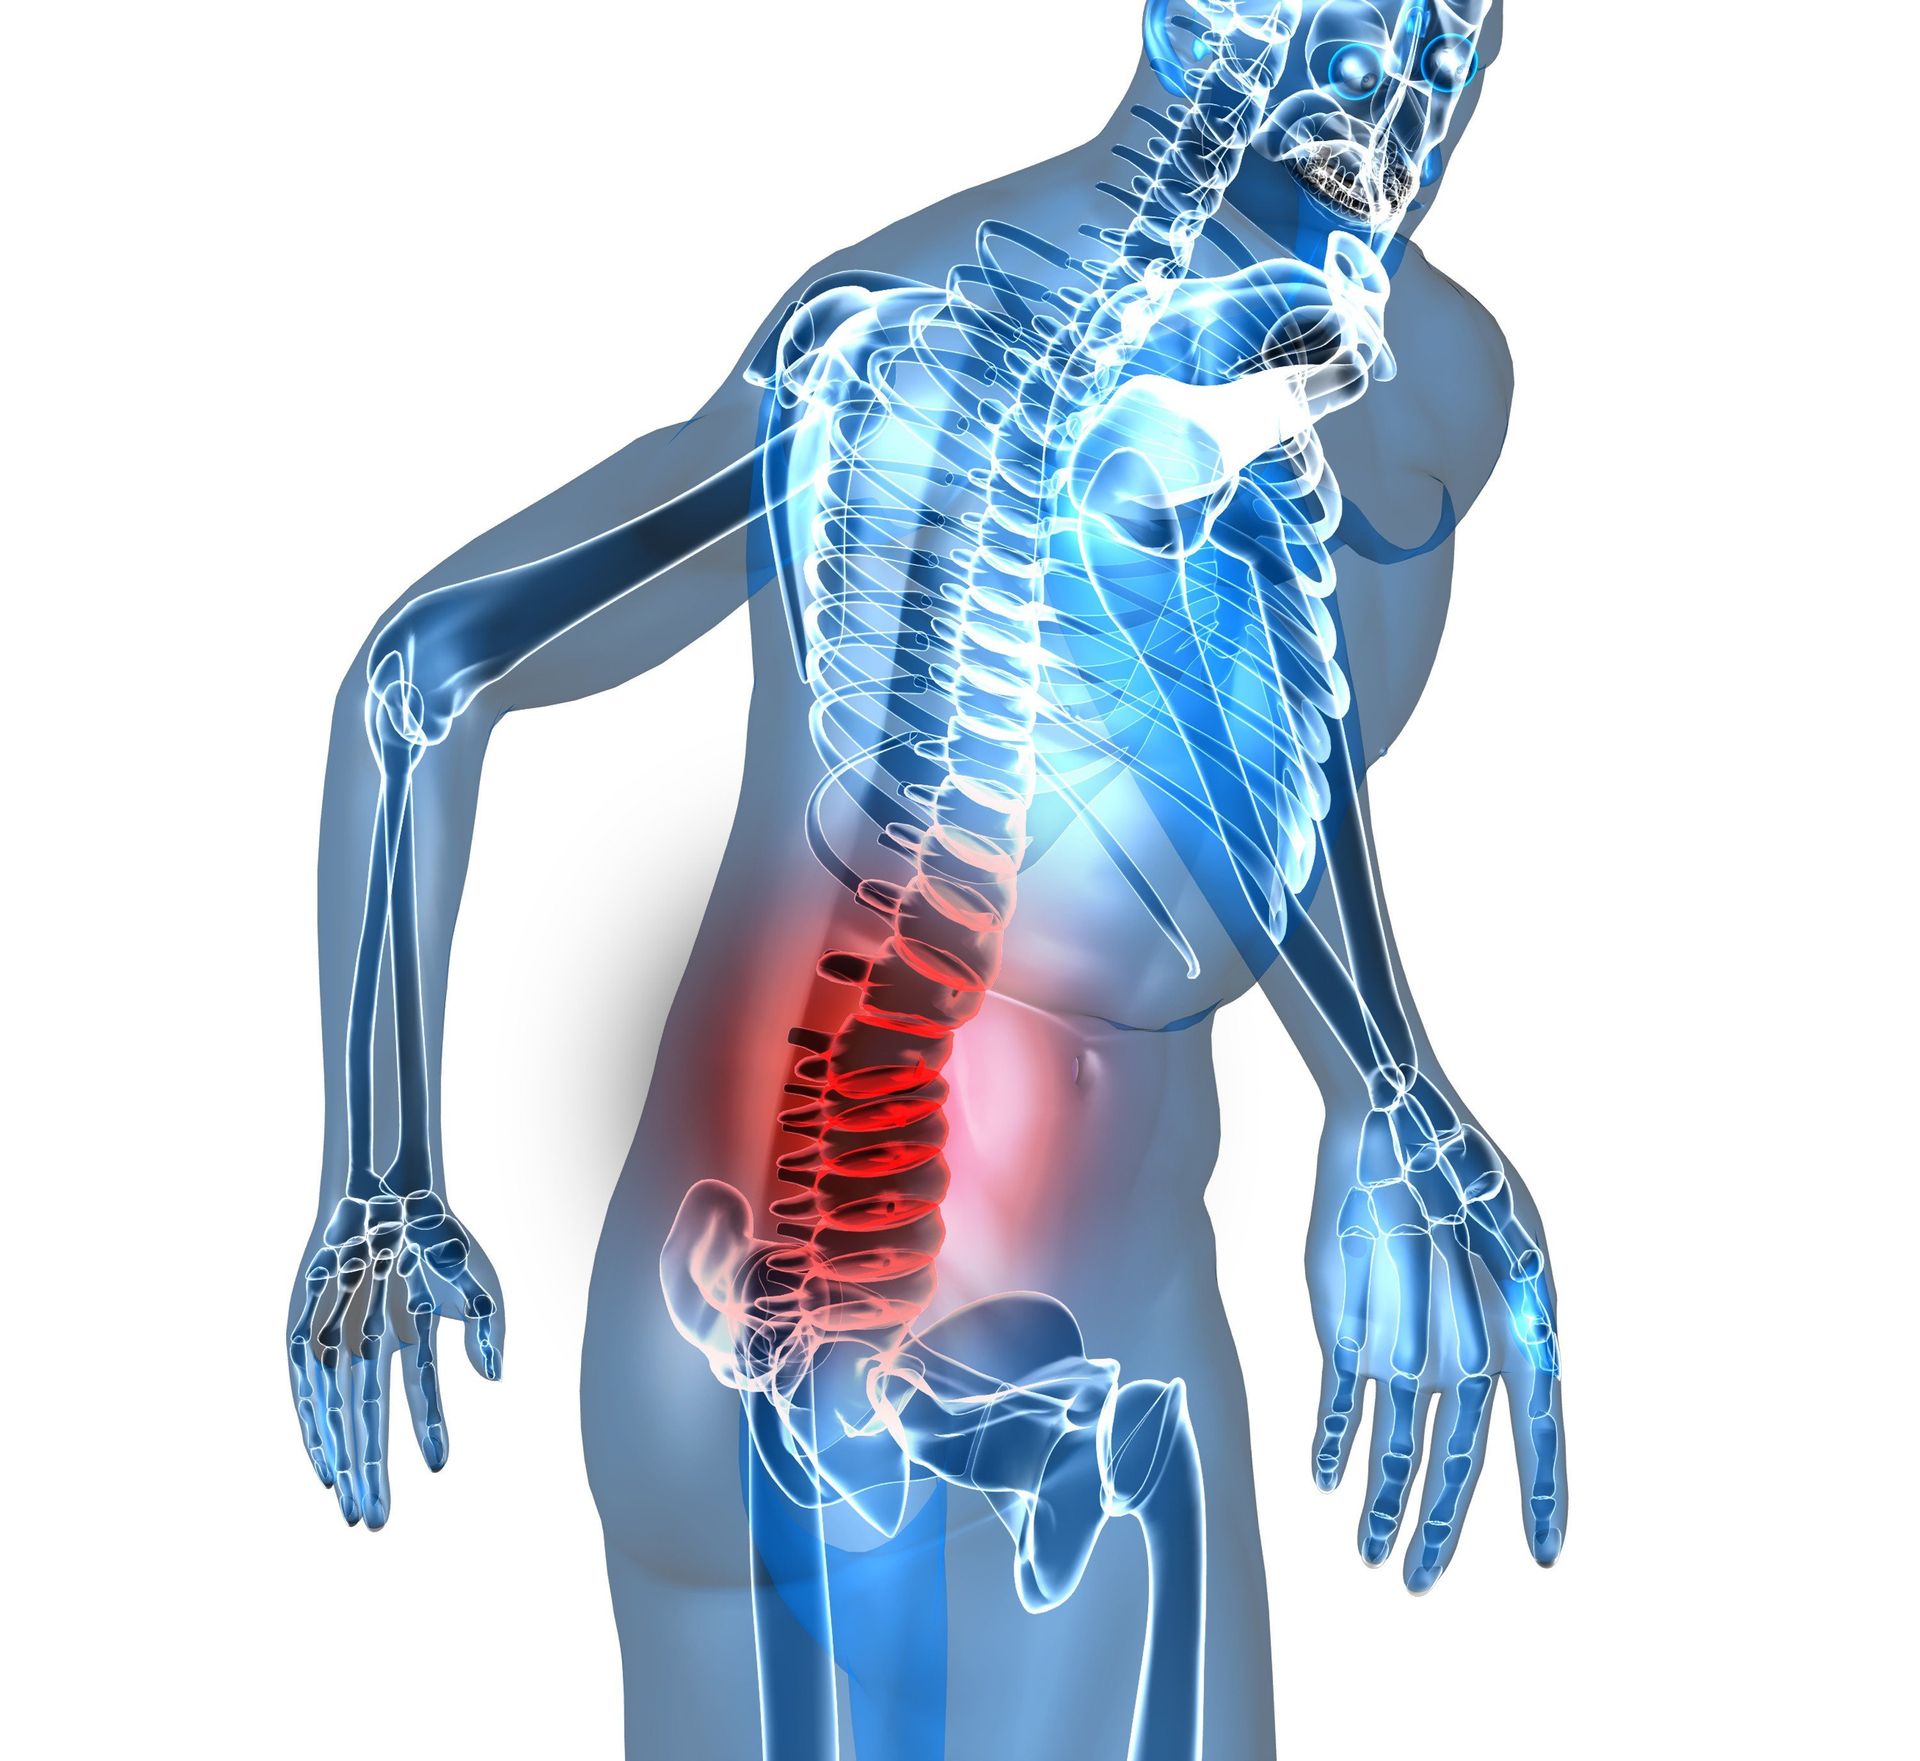 chronic low back pain, low back pain treatment, lumbago